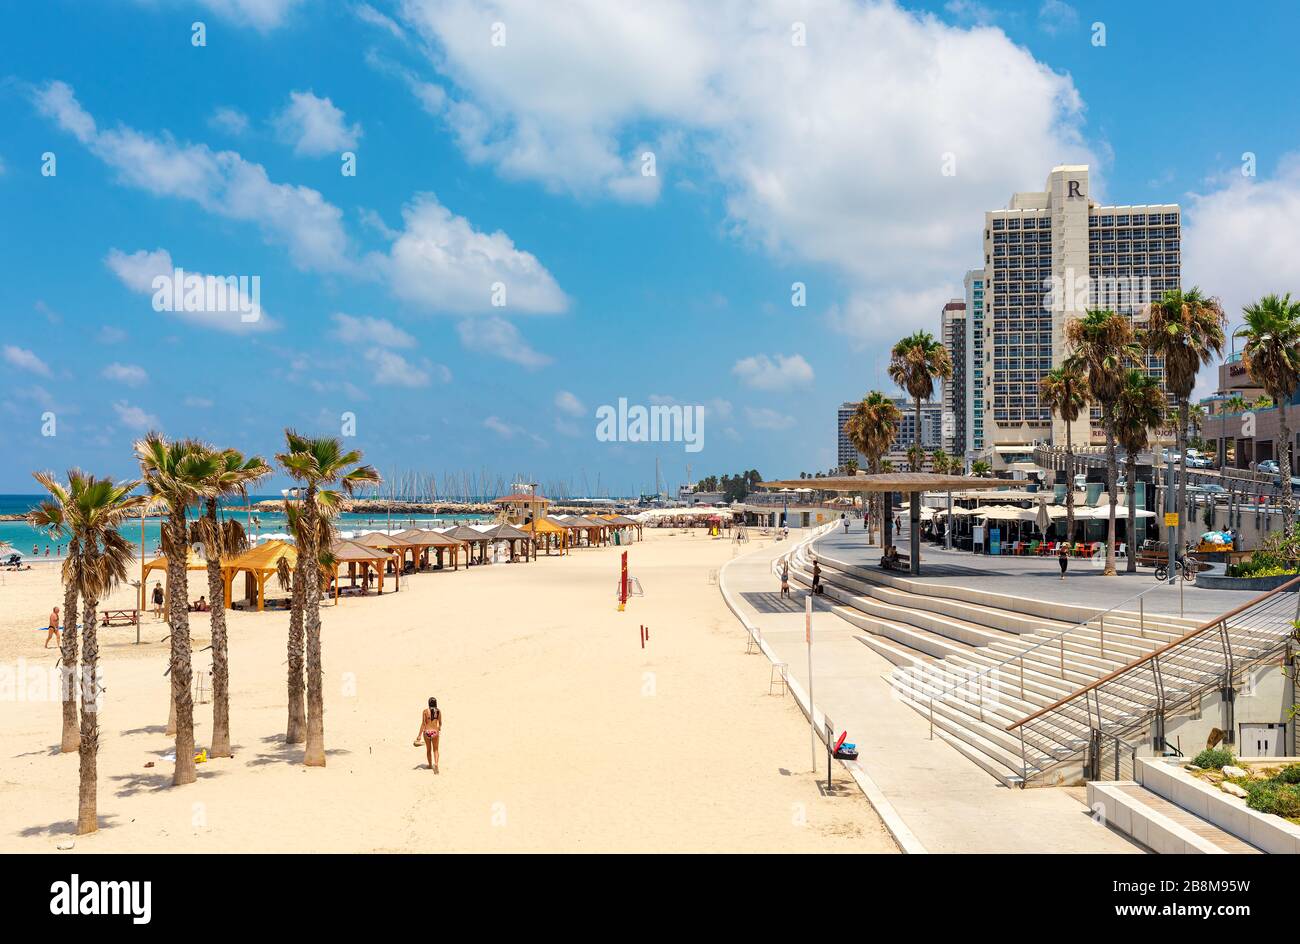 People on public beach along Mediterranean coastline and promenade with modern hotels in Tel Aviv, Israel. Stock Photo